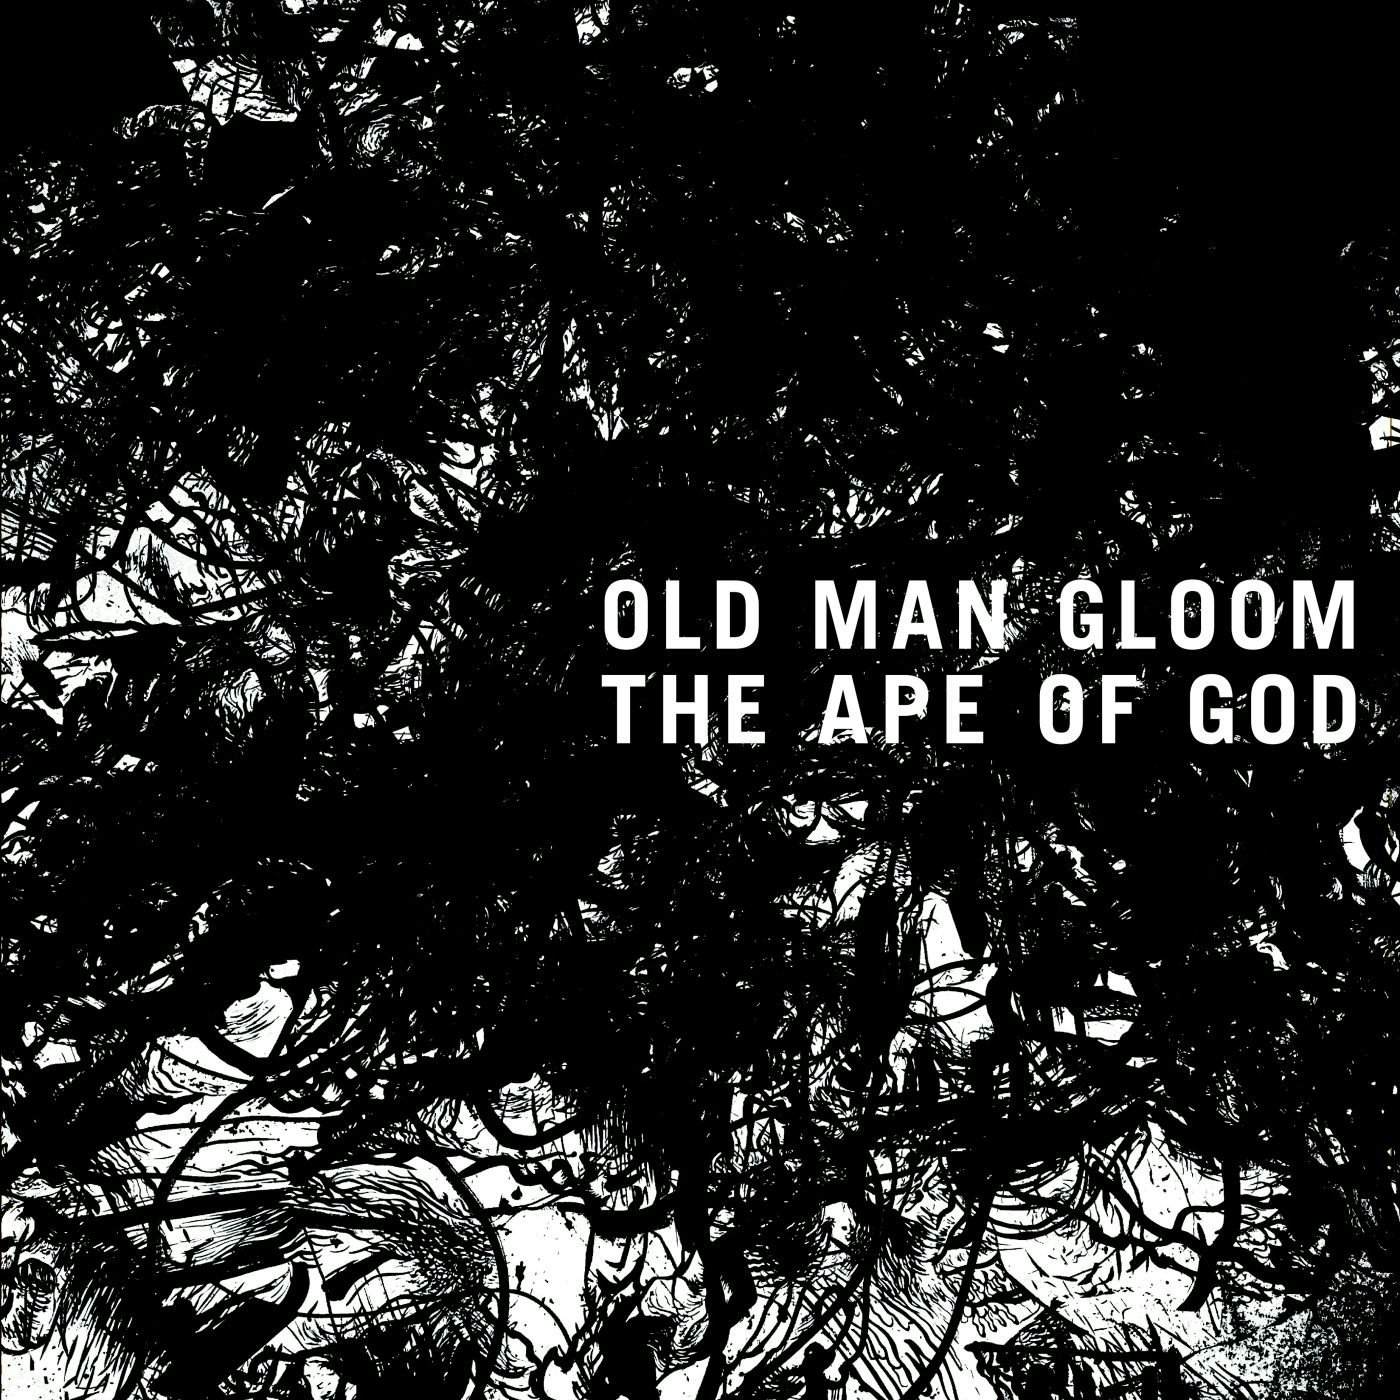 Old Man Gloom APE OF GOD Vinyl Record